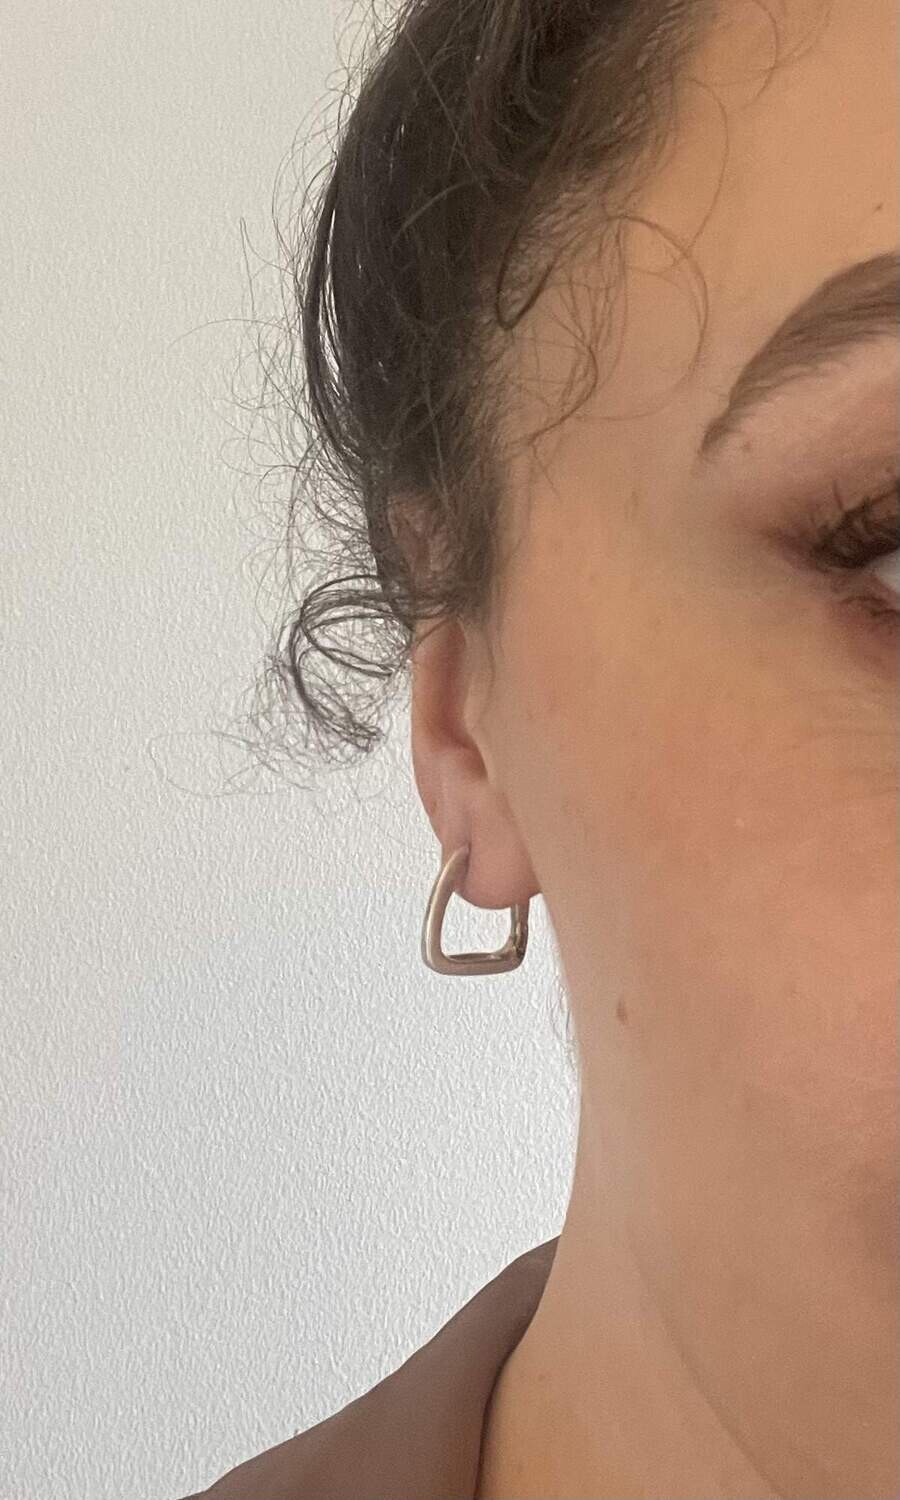 Sleek stirrup earrings